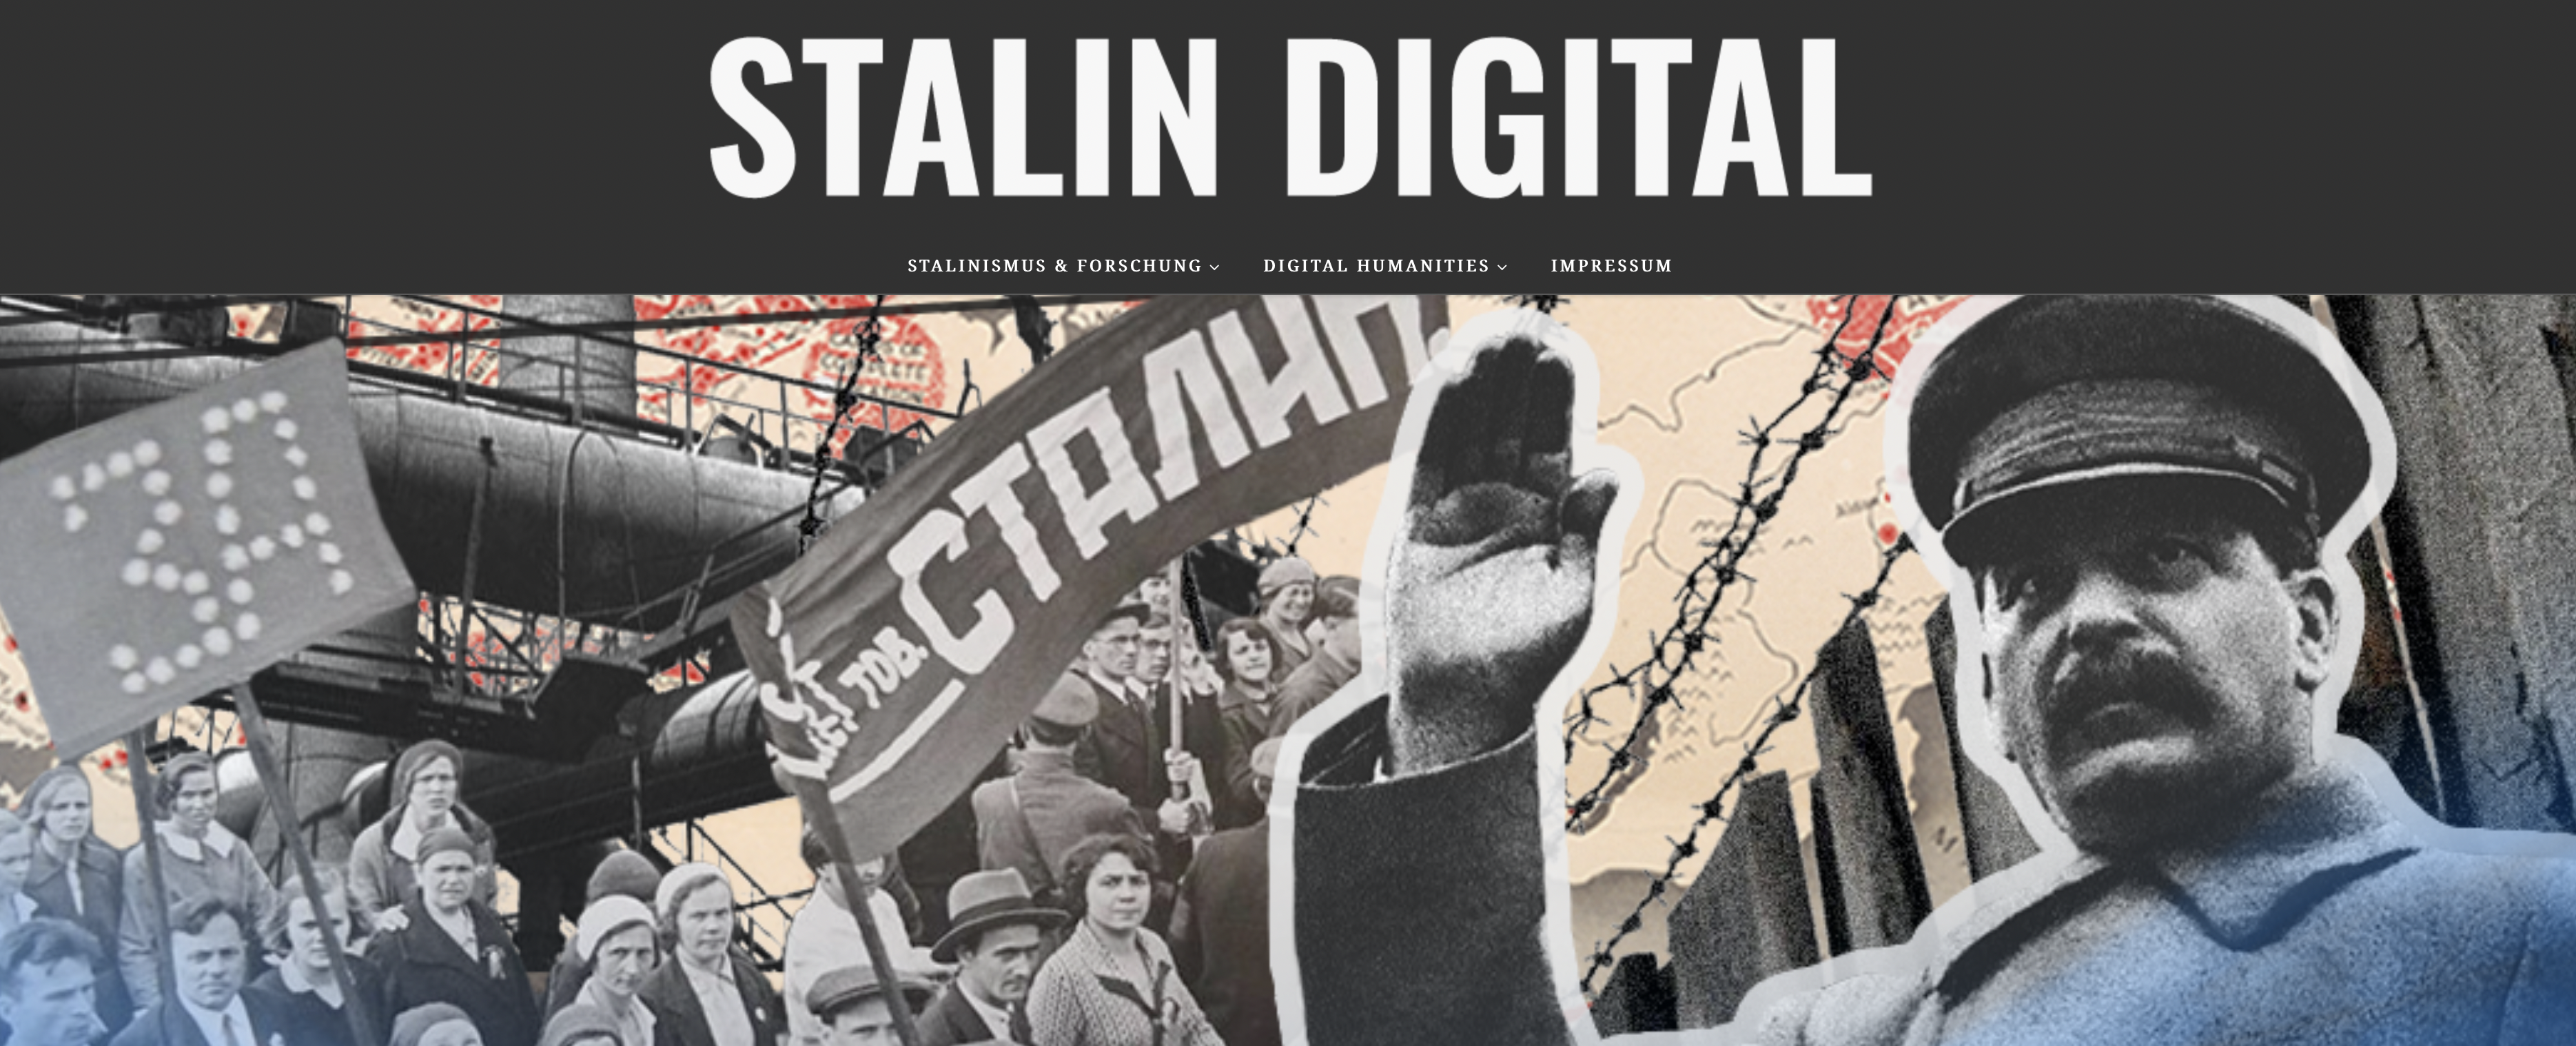 Stalindigital